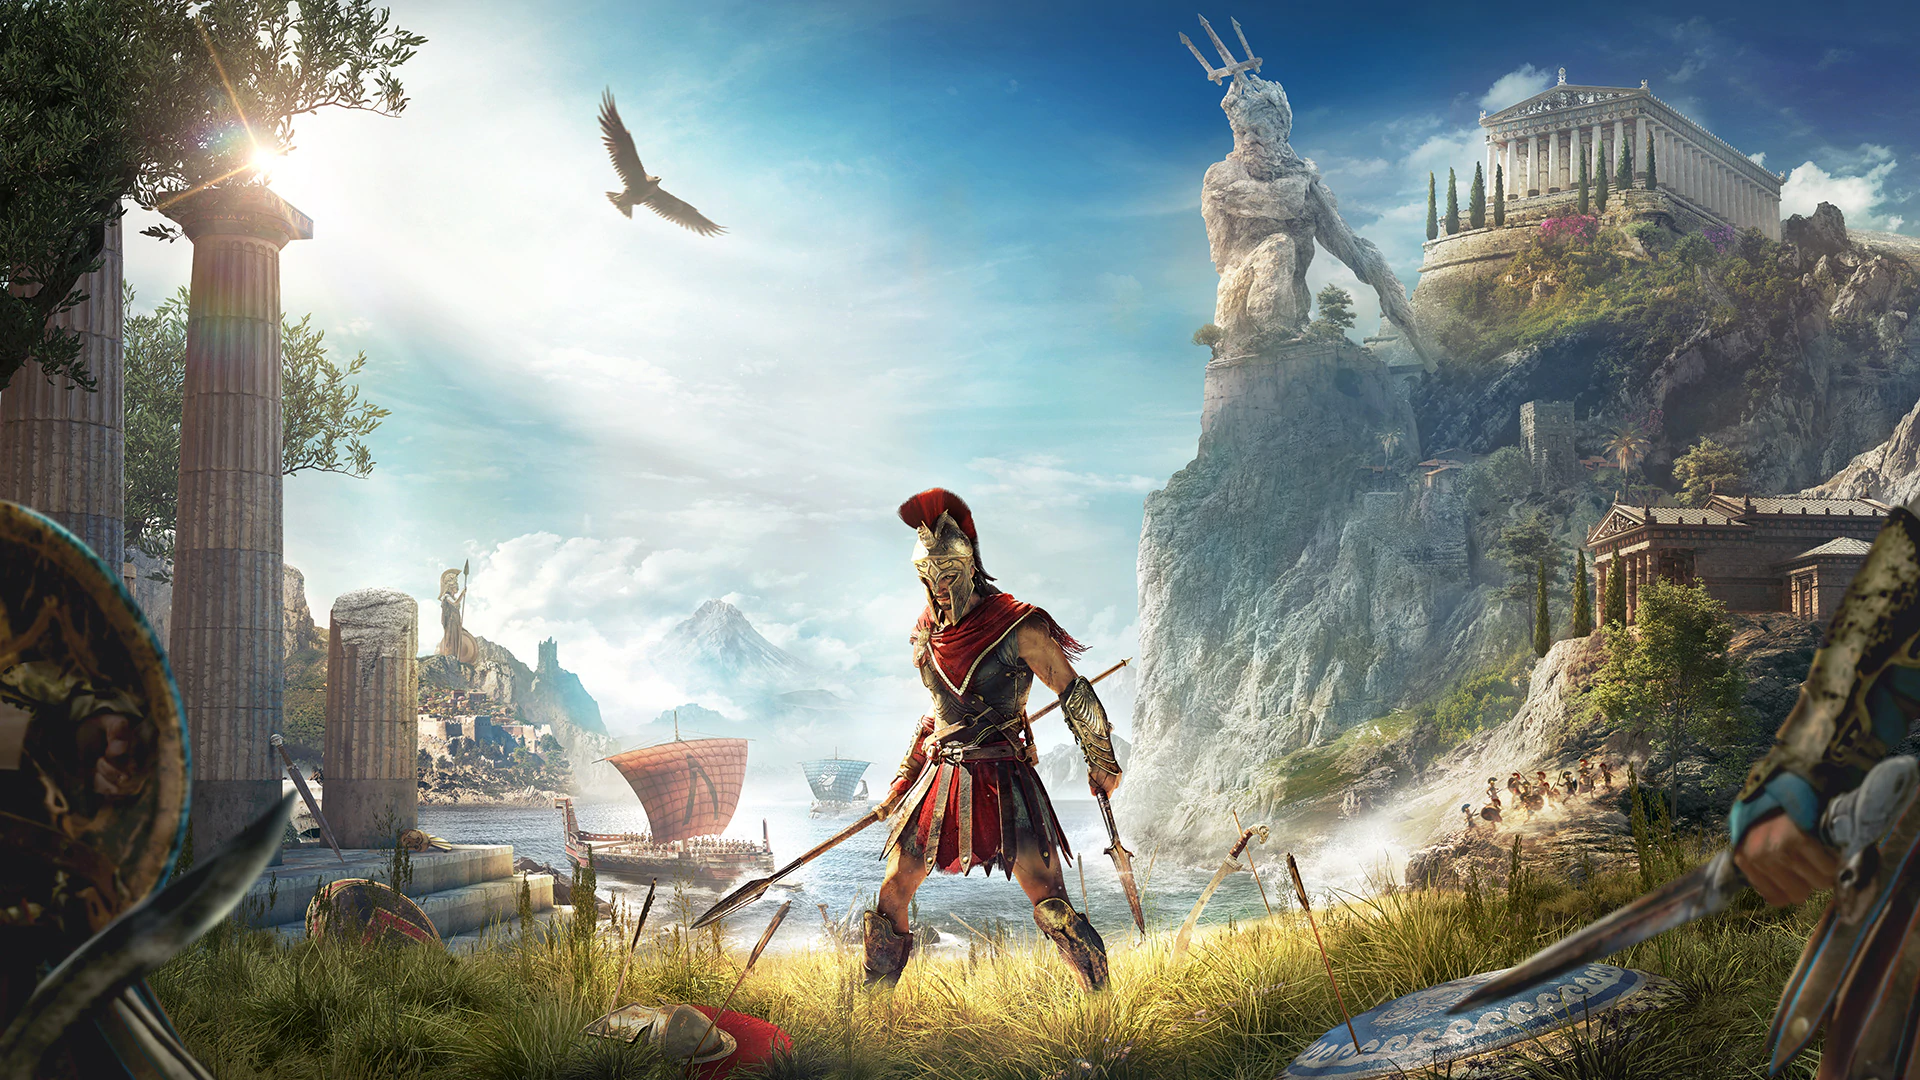 Đôi nét về Assassin's Creed Odyssey